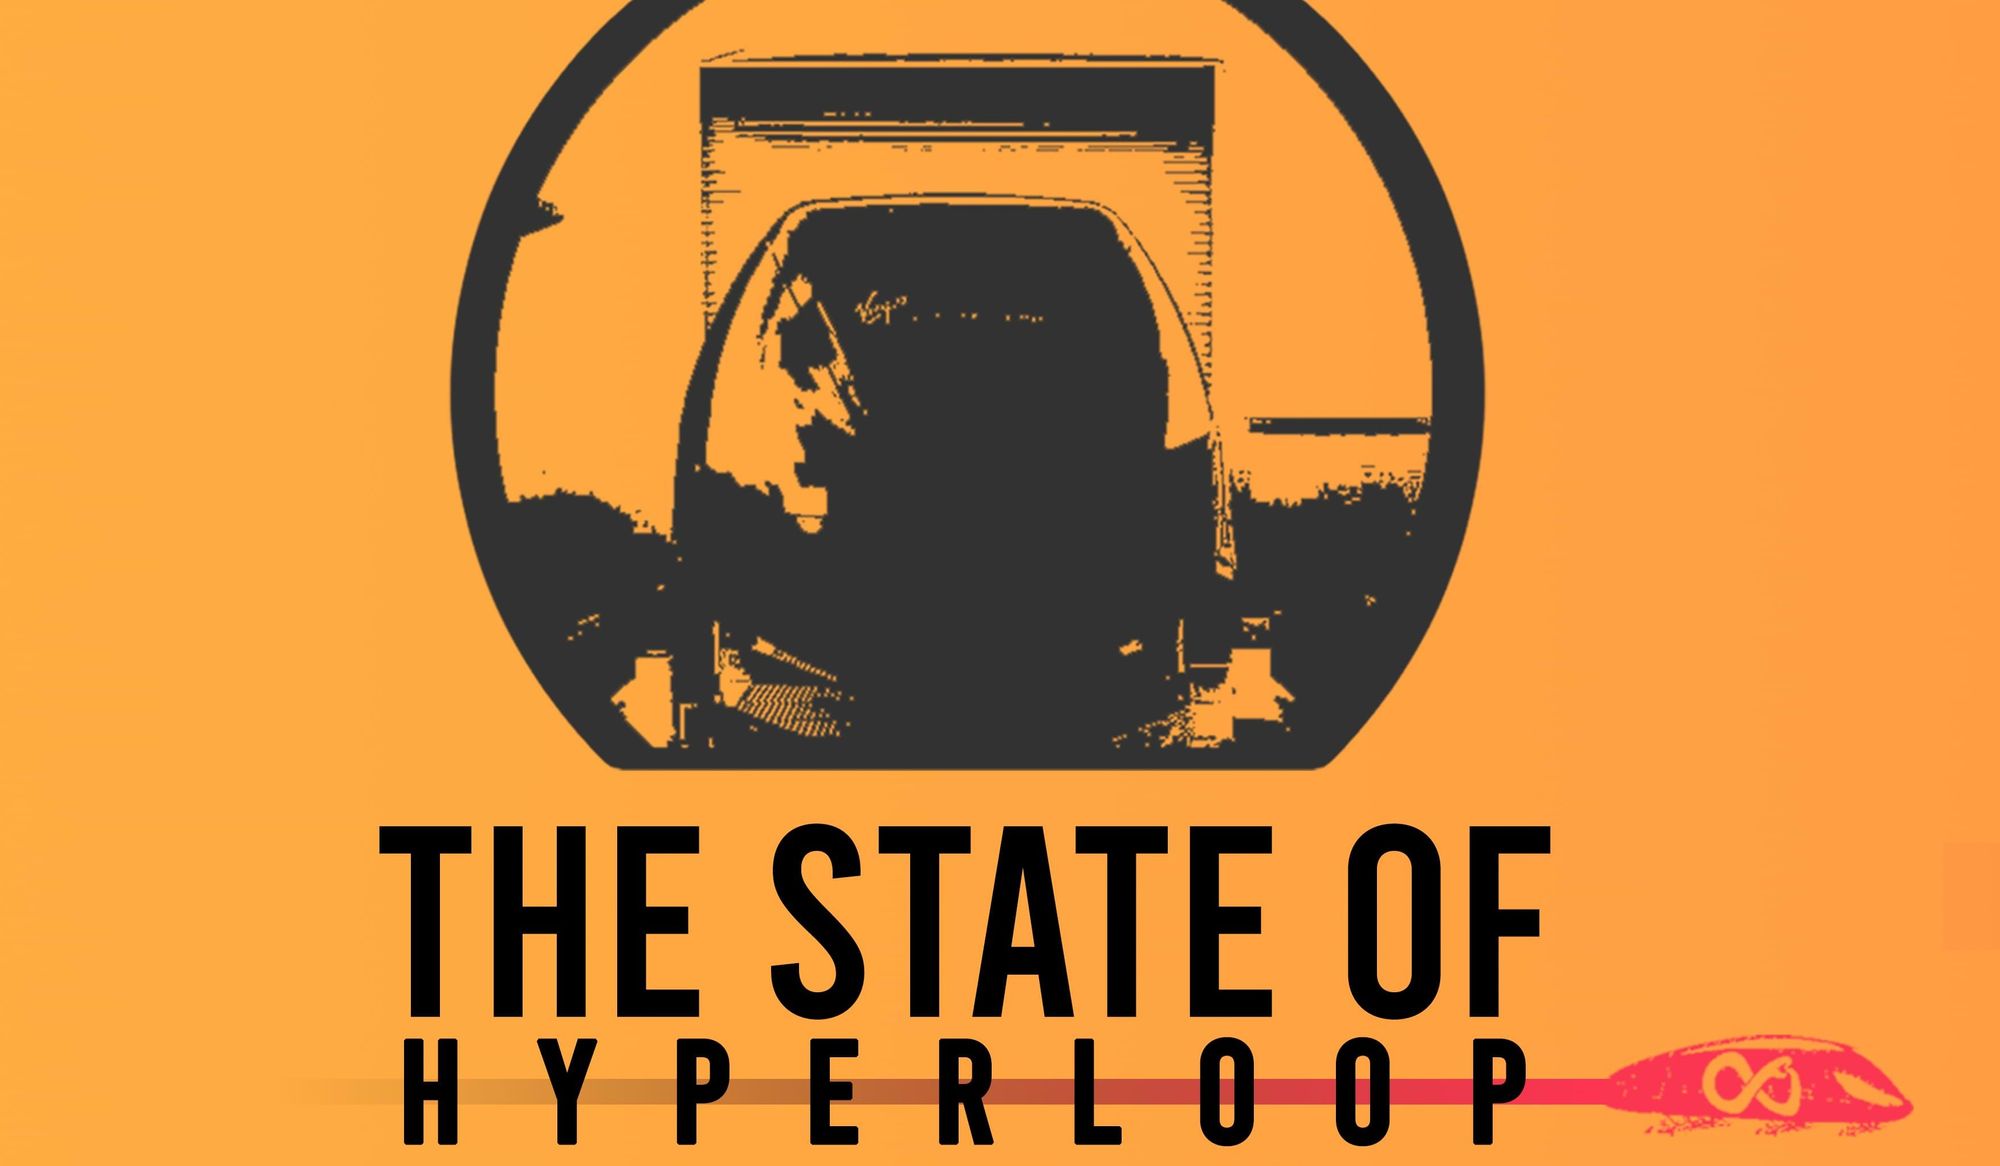 The State of Hyperloop